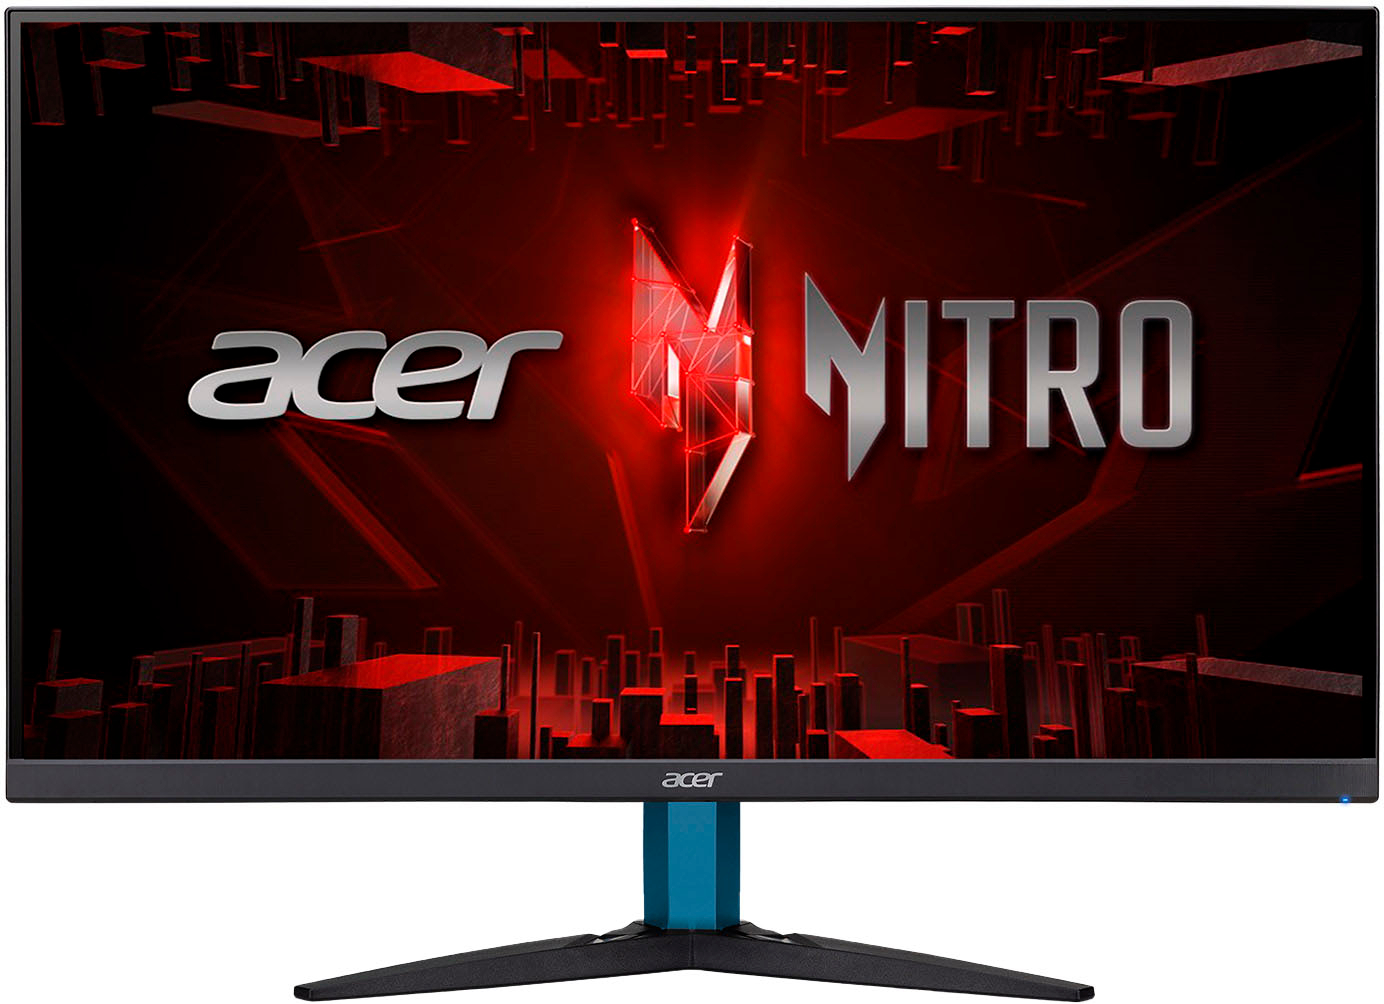 Acer - Nitro KG272U Pbmiipx 27" LED WQHD FreeSync Gaming Monitor (HDMI, DP) - Black $170